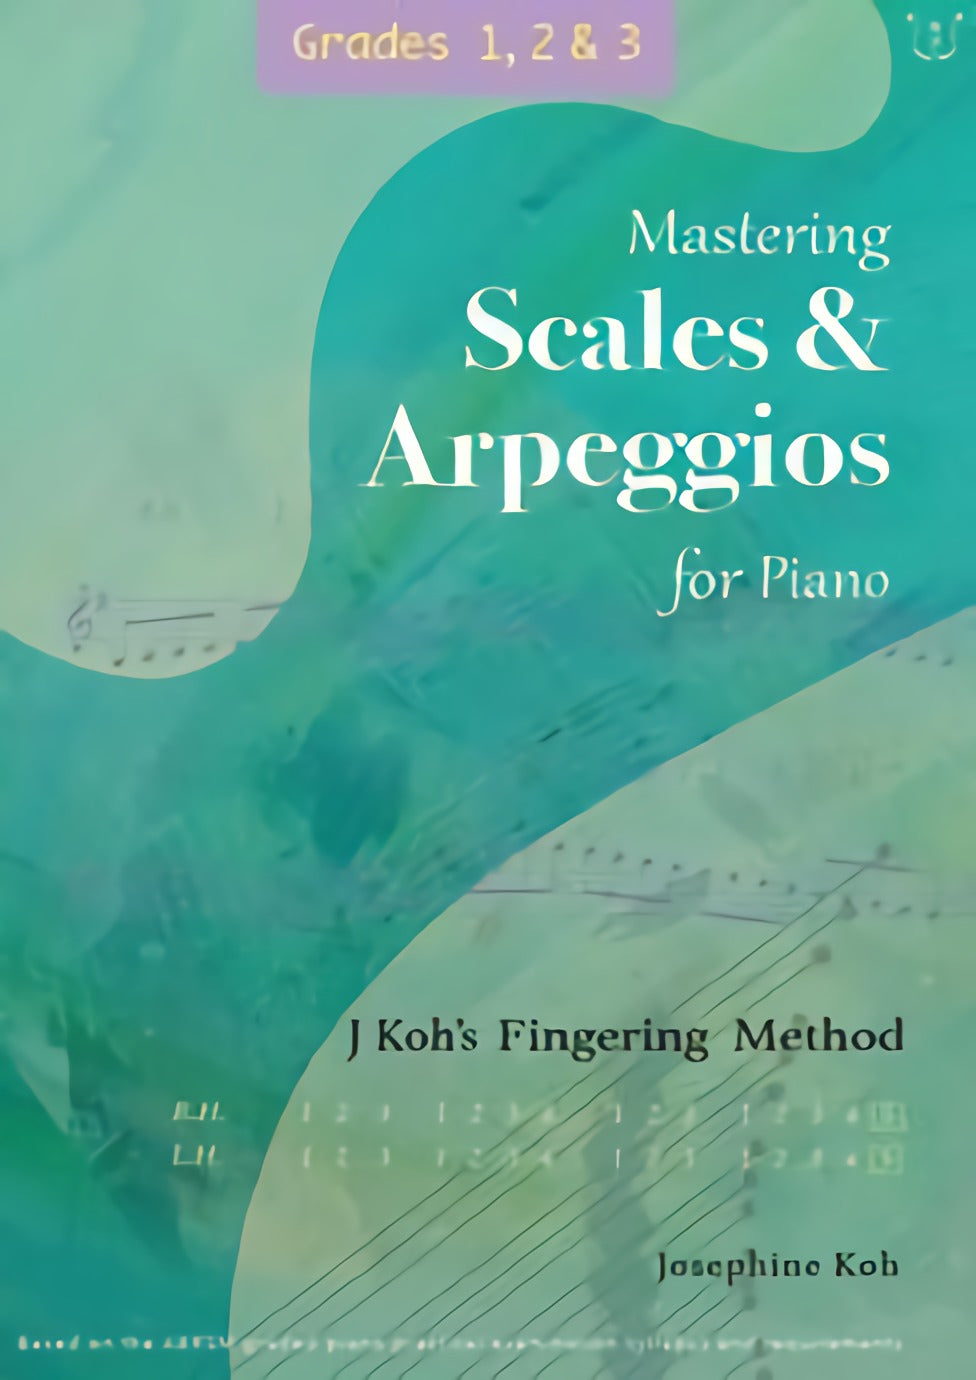 Mastering Scales and Arpeggios, J Koh's Fingering Method, Grades 1-3